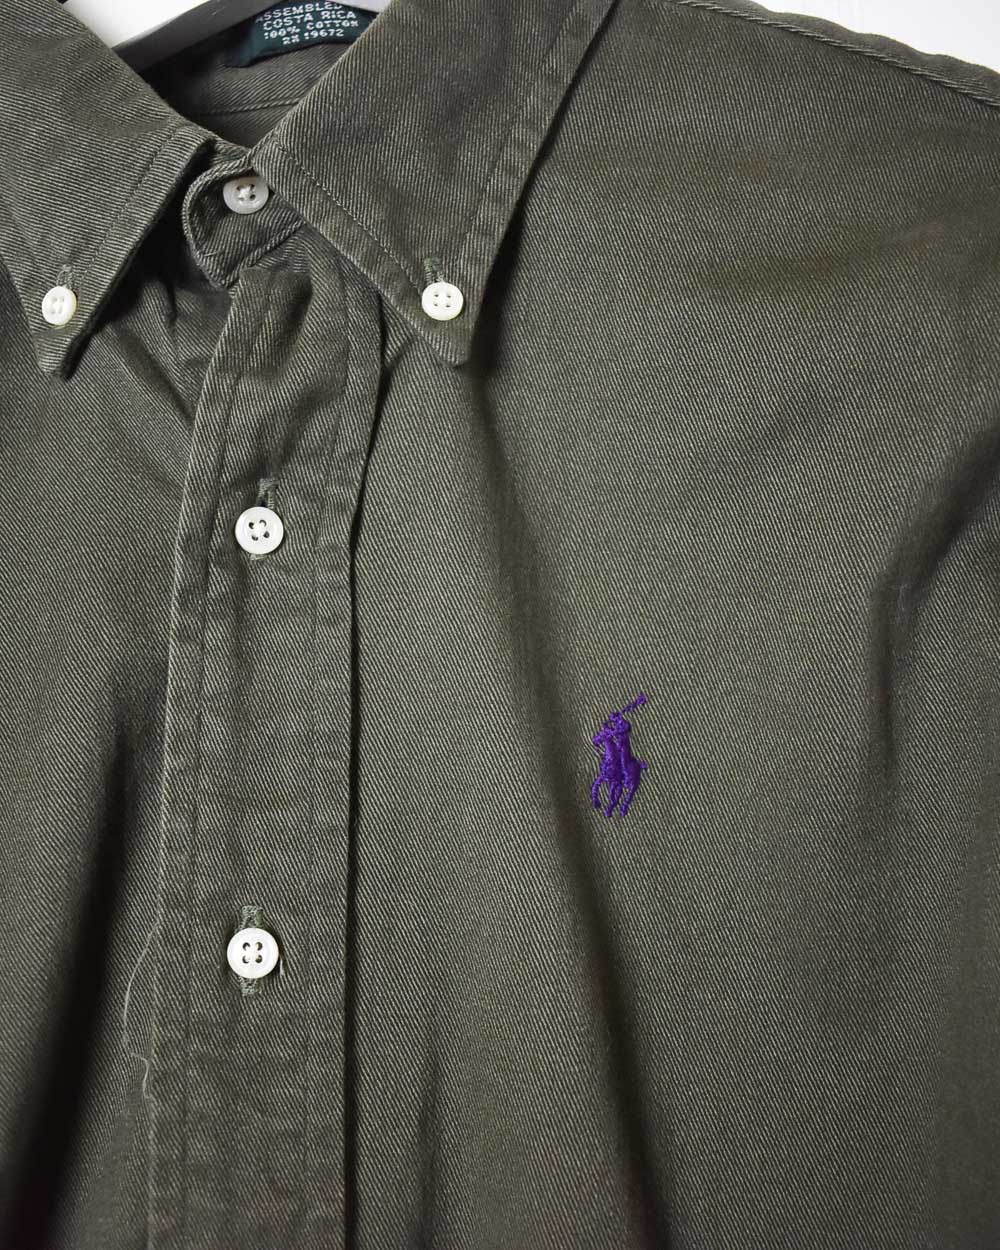 Khaki Polo Ralph Lauren Shirt - Medium